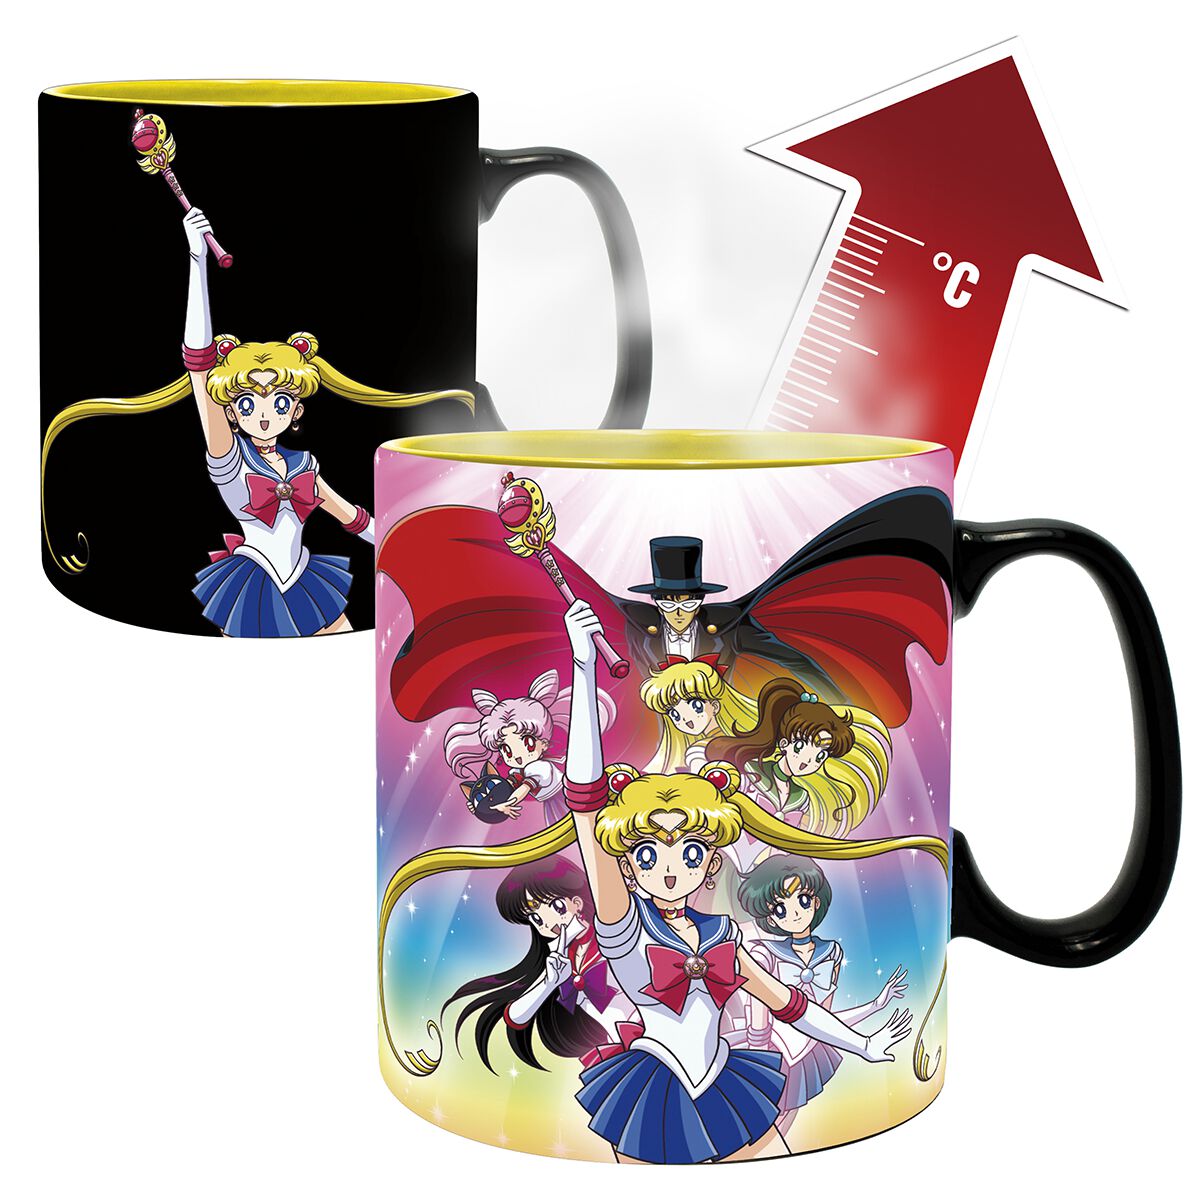 Mug de Sailor Moon - Groupe - Mug Thermo-Réactif - pour Unisexe - multicolore